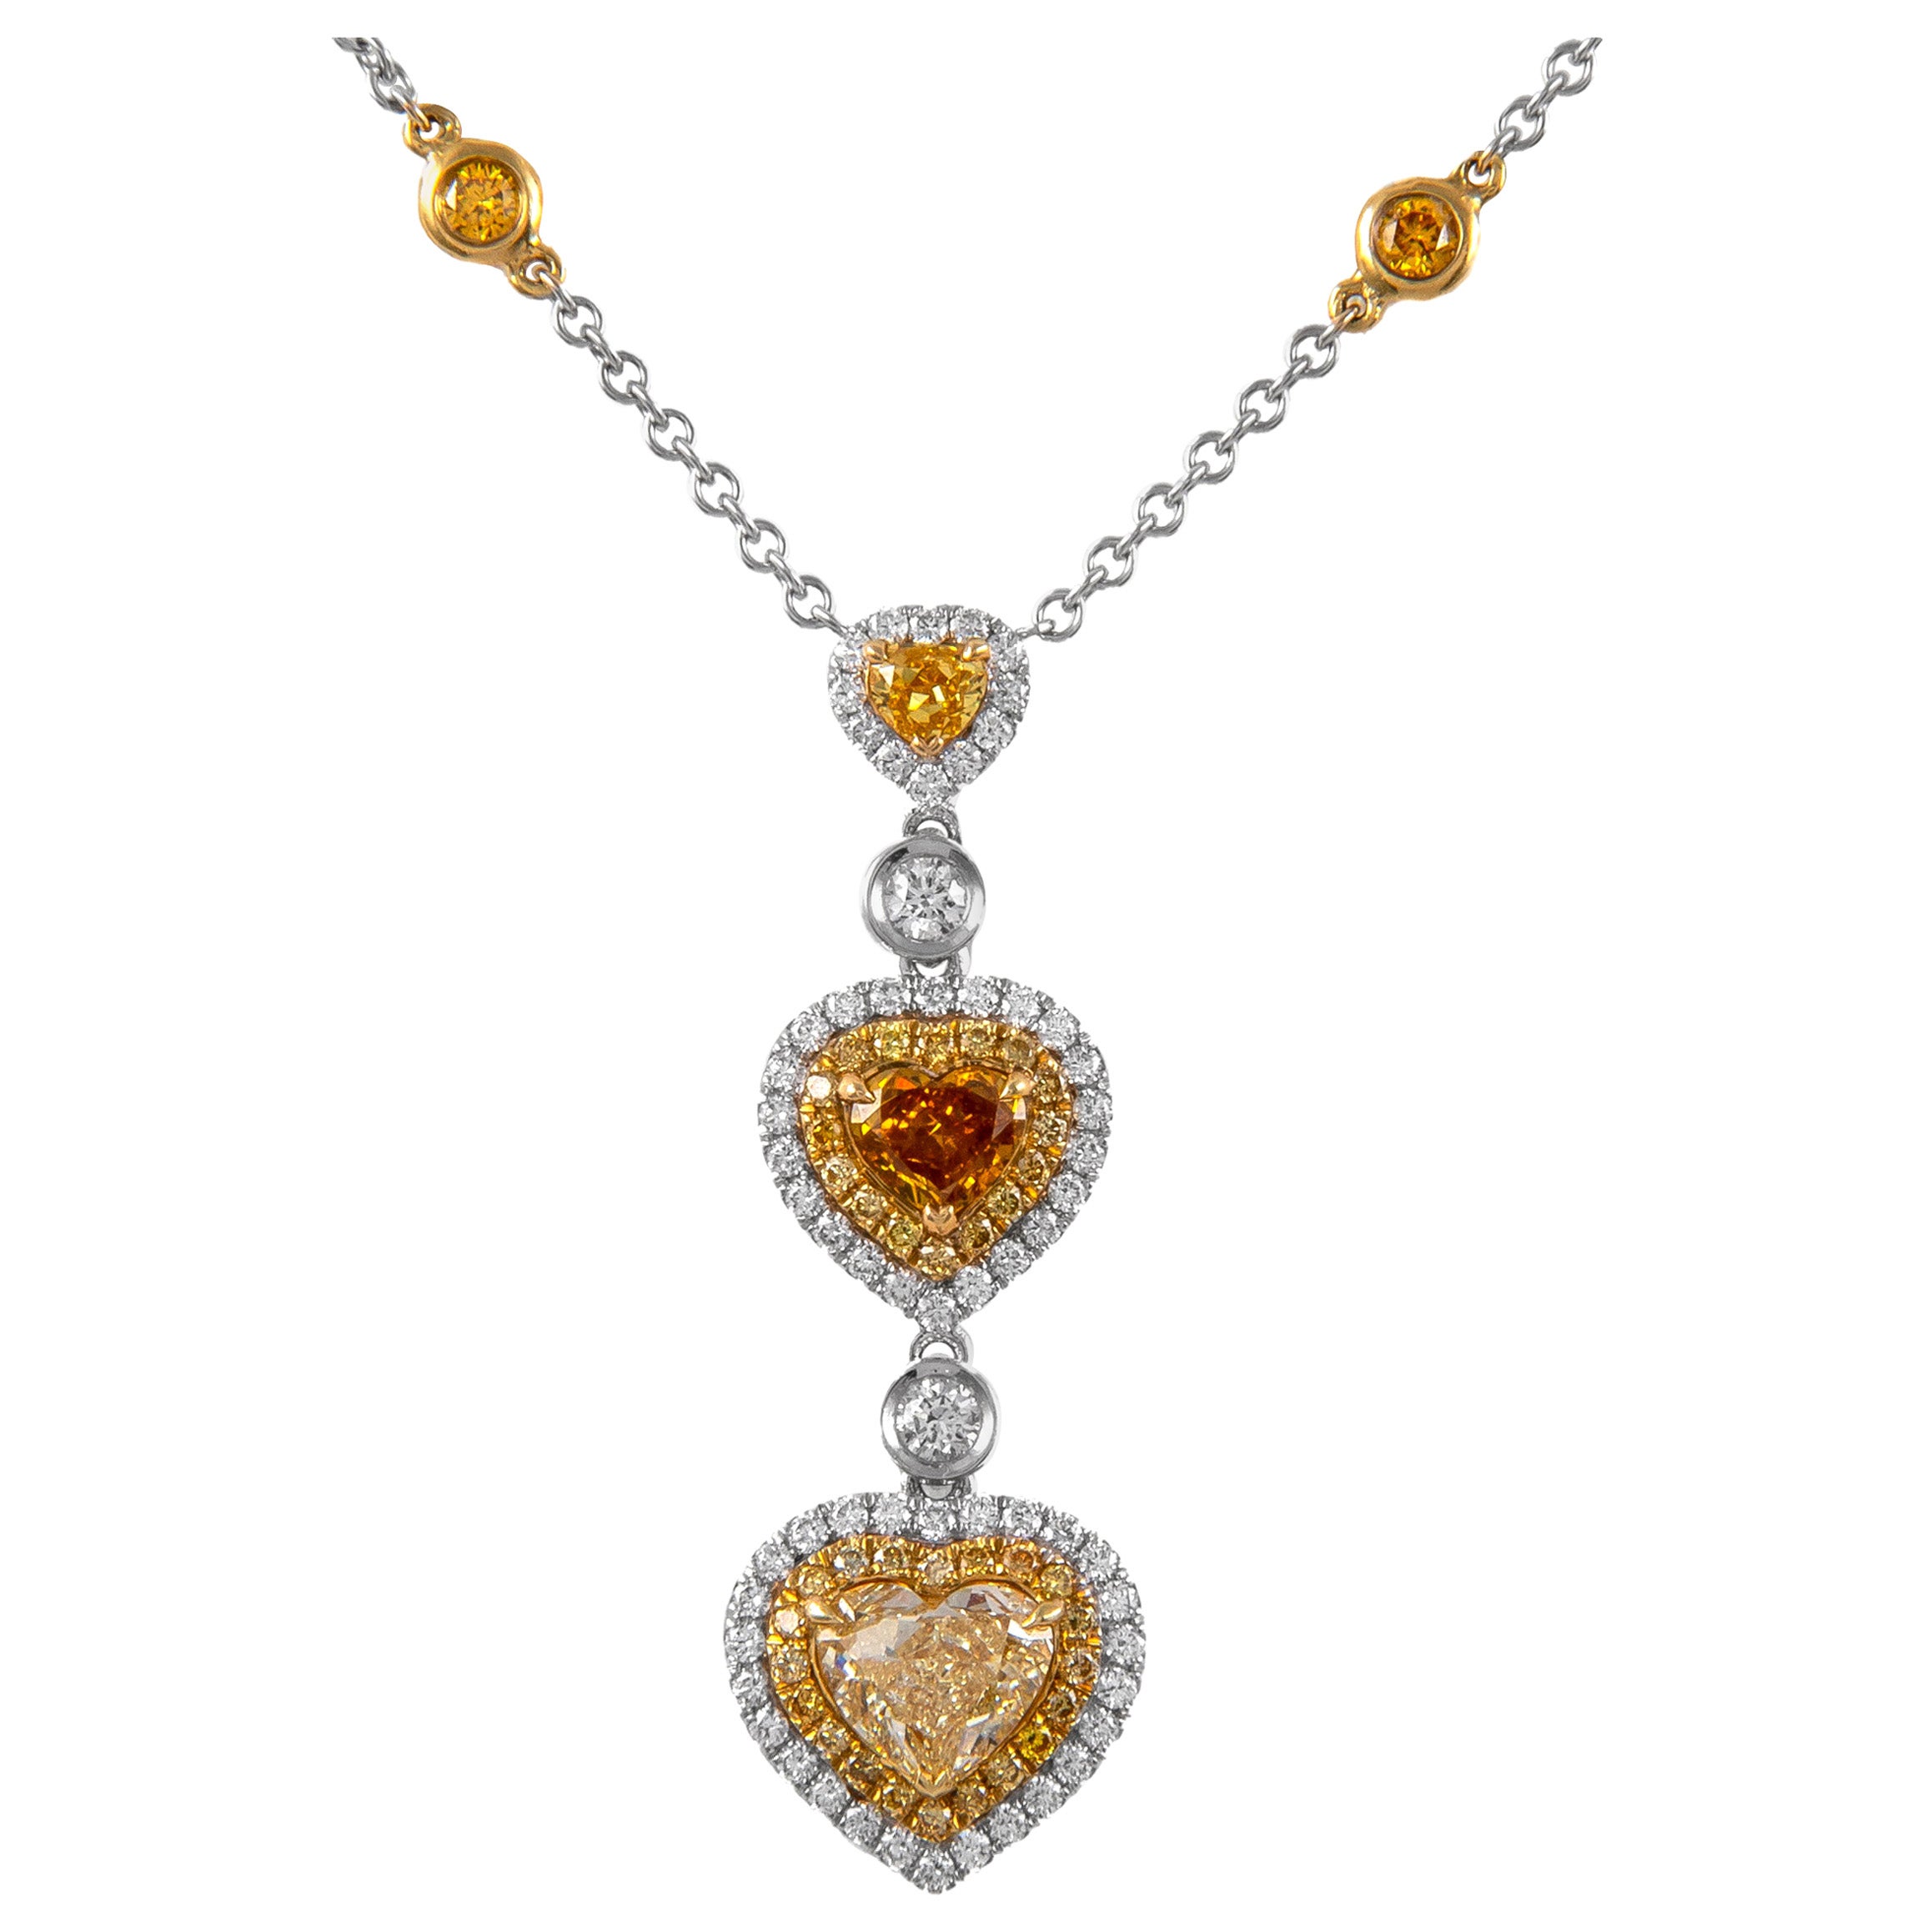 Alexander GIA 4.15ctt Fancy Color Diamond Drop Necklace 18k White & Yellow Gold For Sale